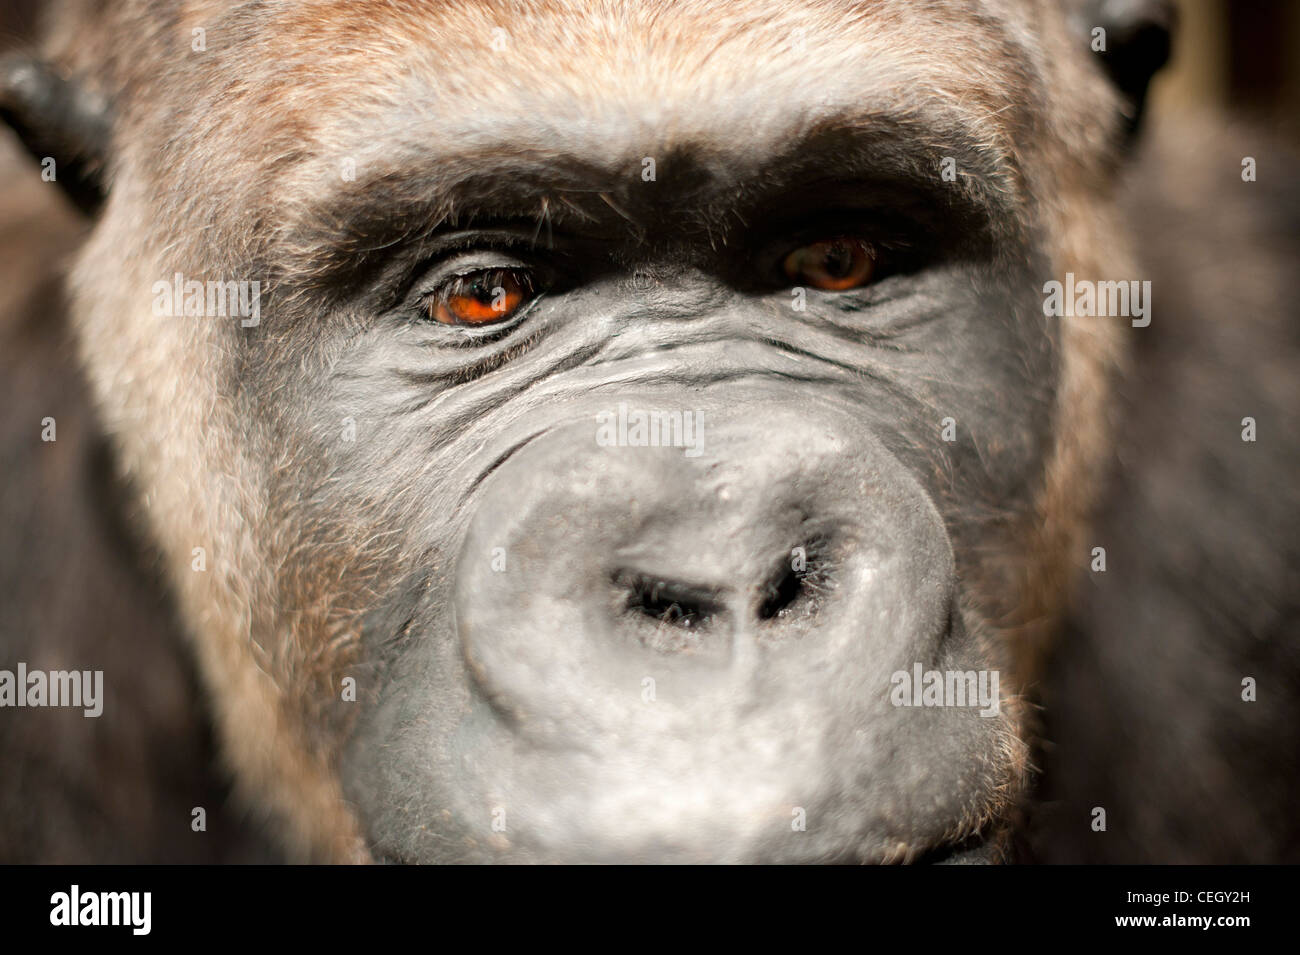 Stuffed Gorilla - Alfred the Ape Stock Photo